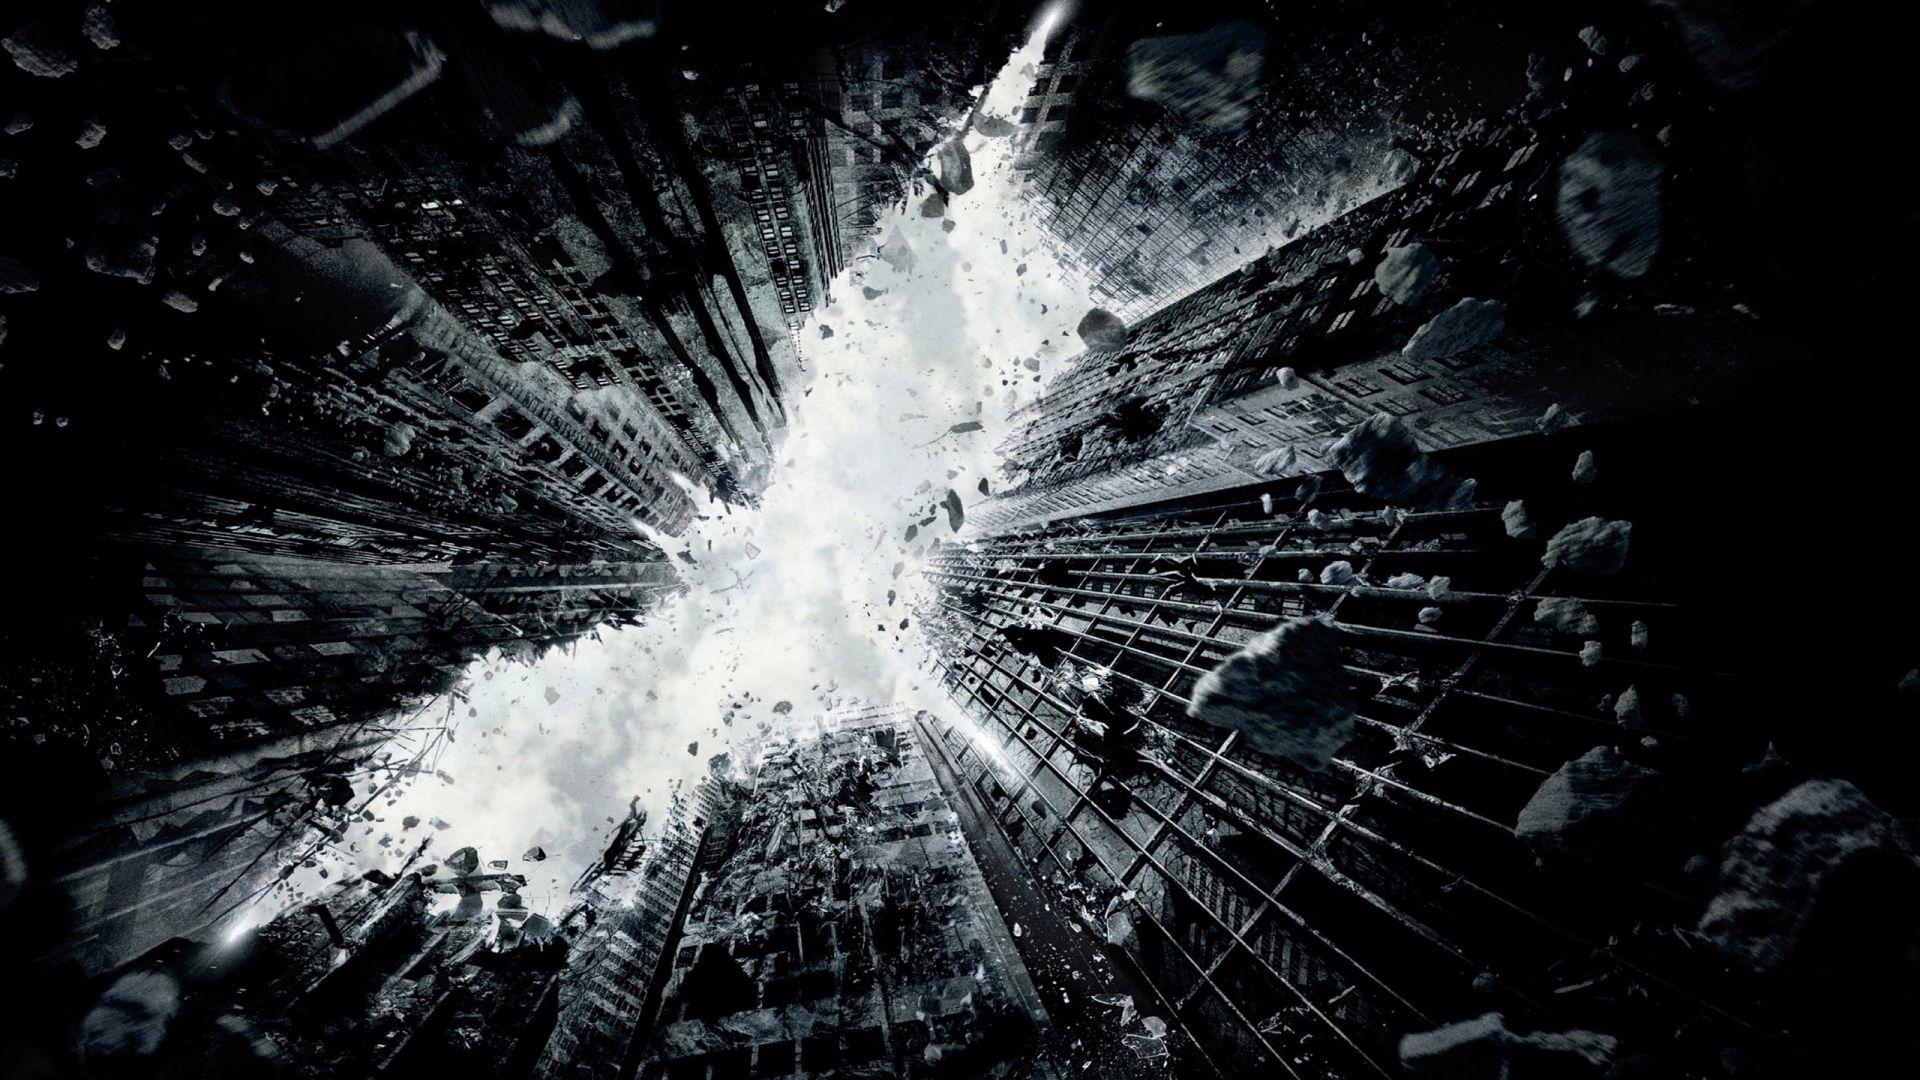 The Dark Knight Rises Buildings Collapsing Desktop Wallpaper